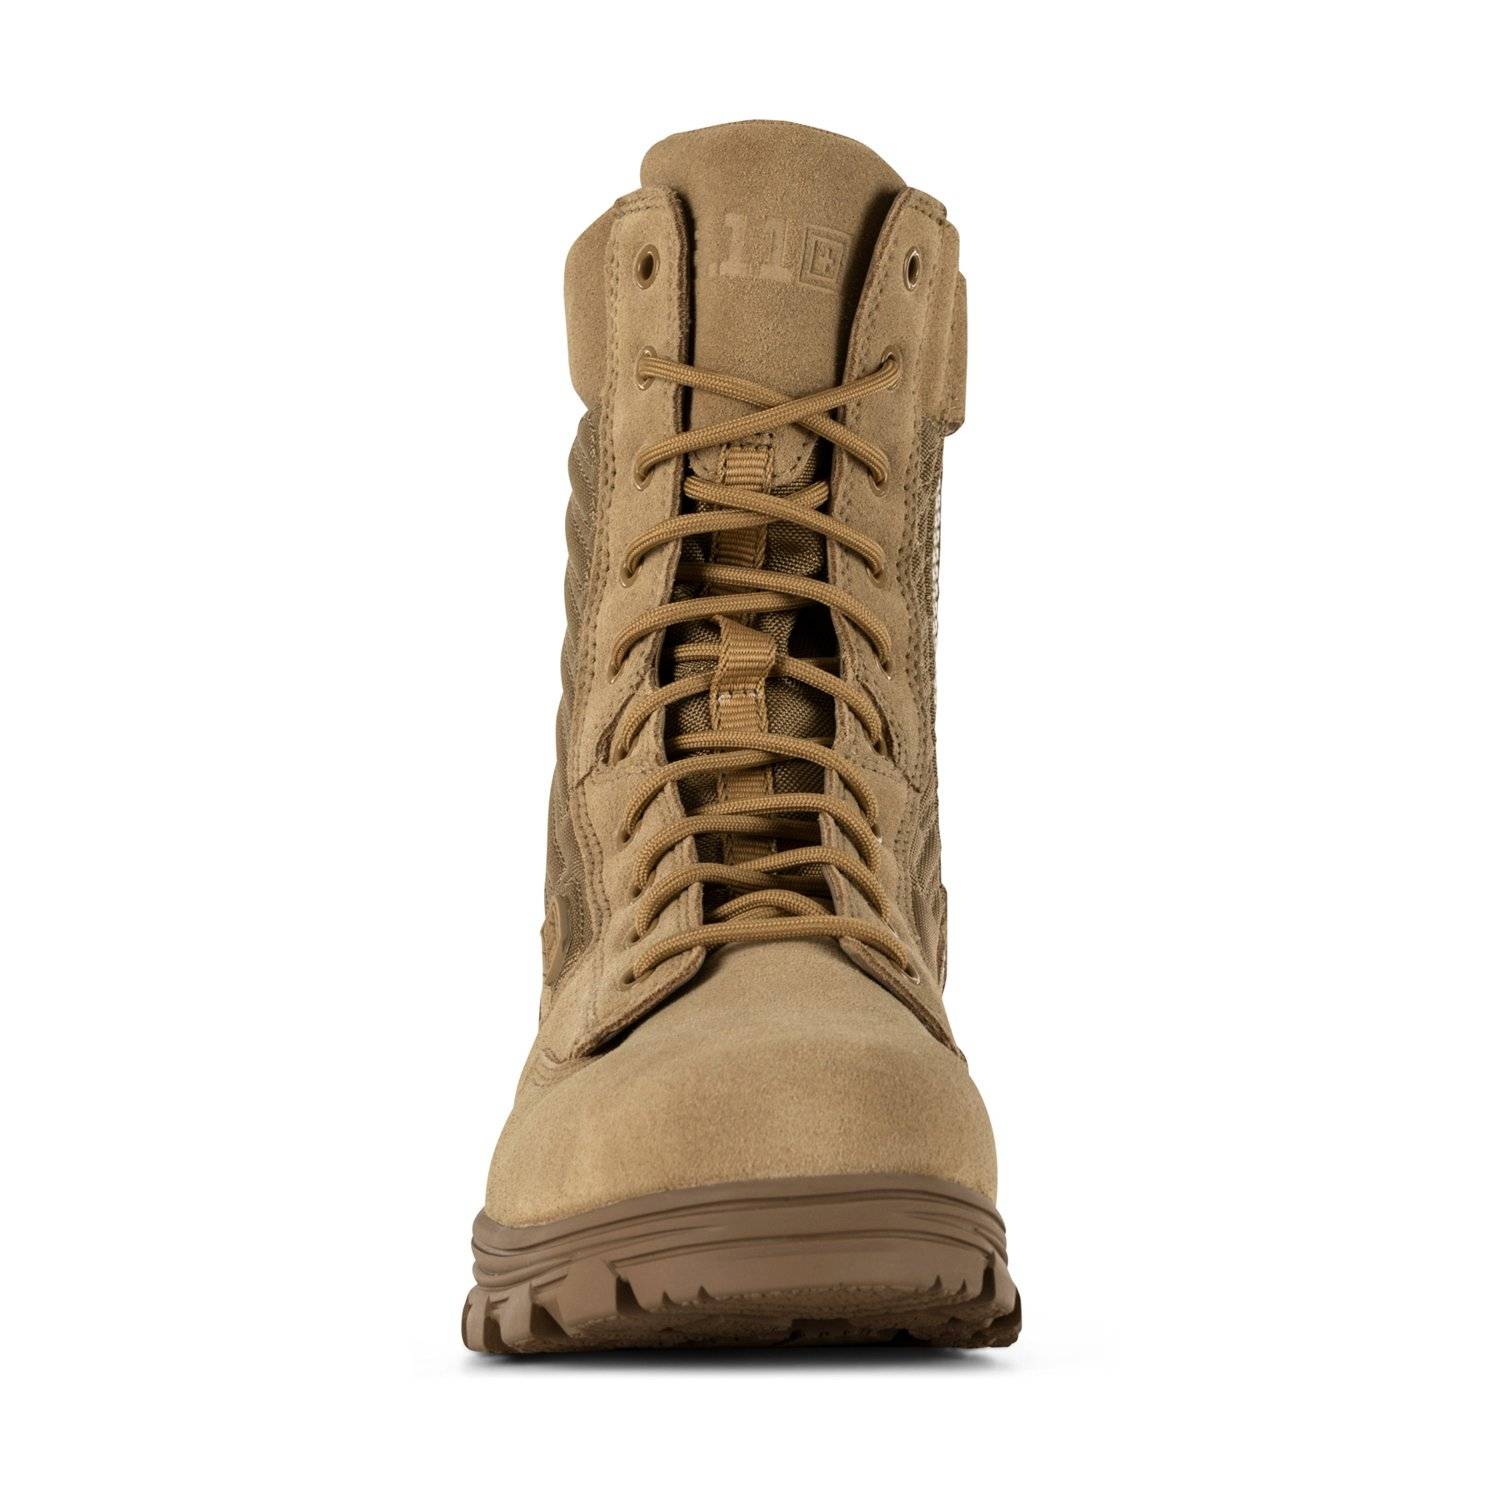 5.11® A/T 8 ARID Boot: High-Performance Tactical Footwear